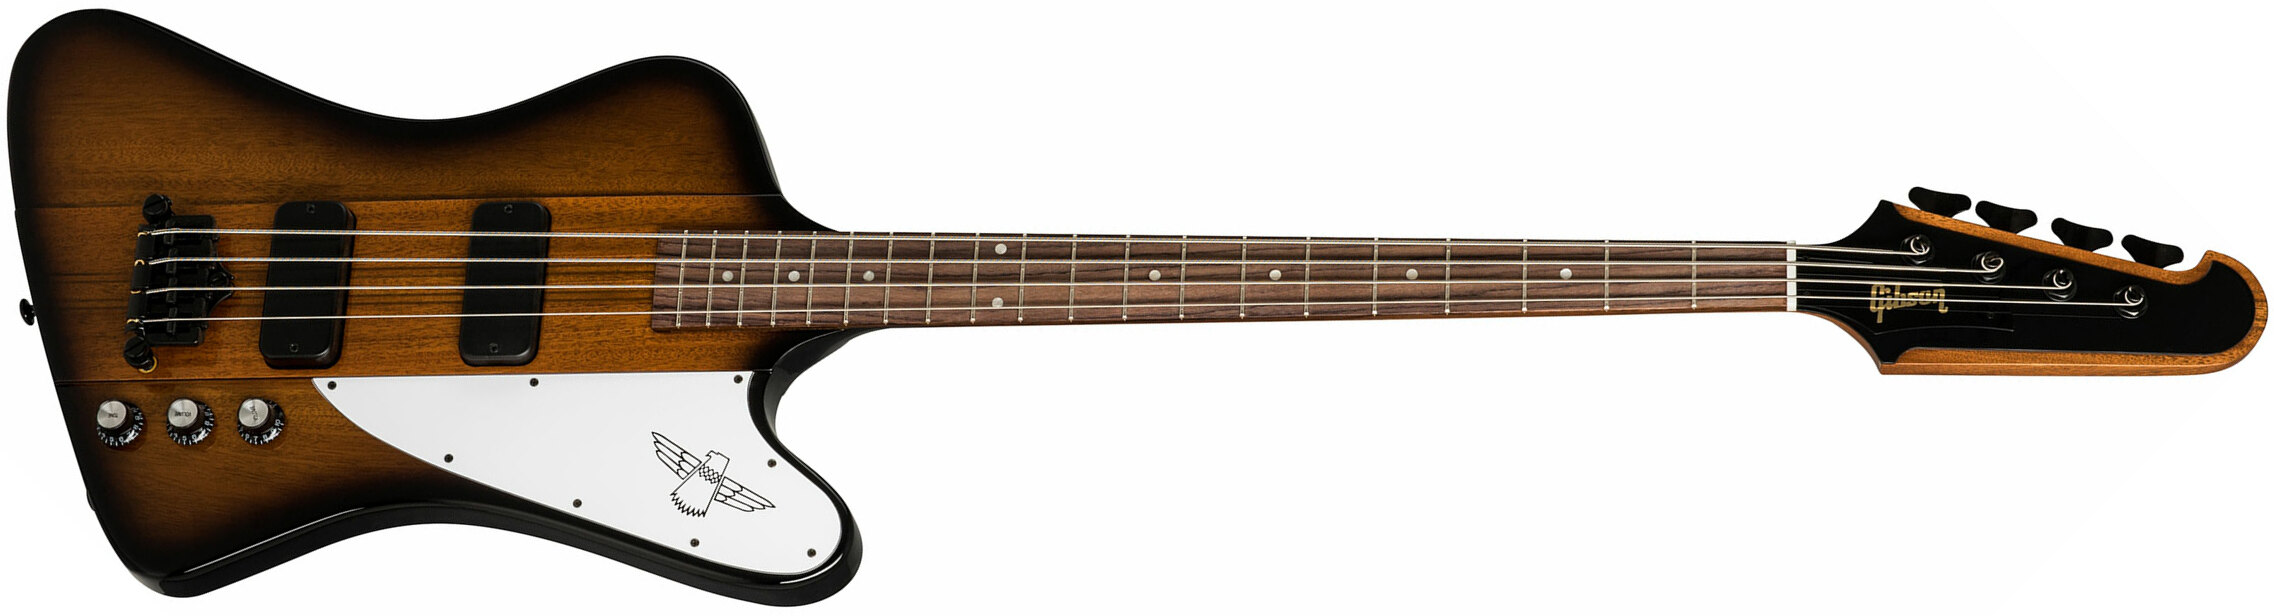 Gibson Thunderbird Bass 2019 - Vintage Sunburst - Solidbody E-bass - Main picture